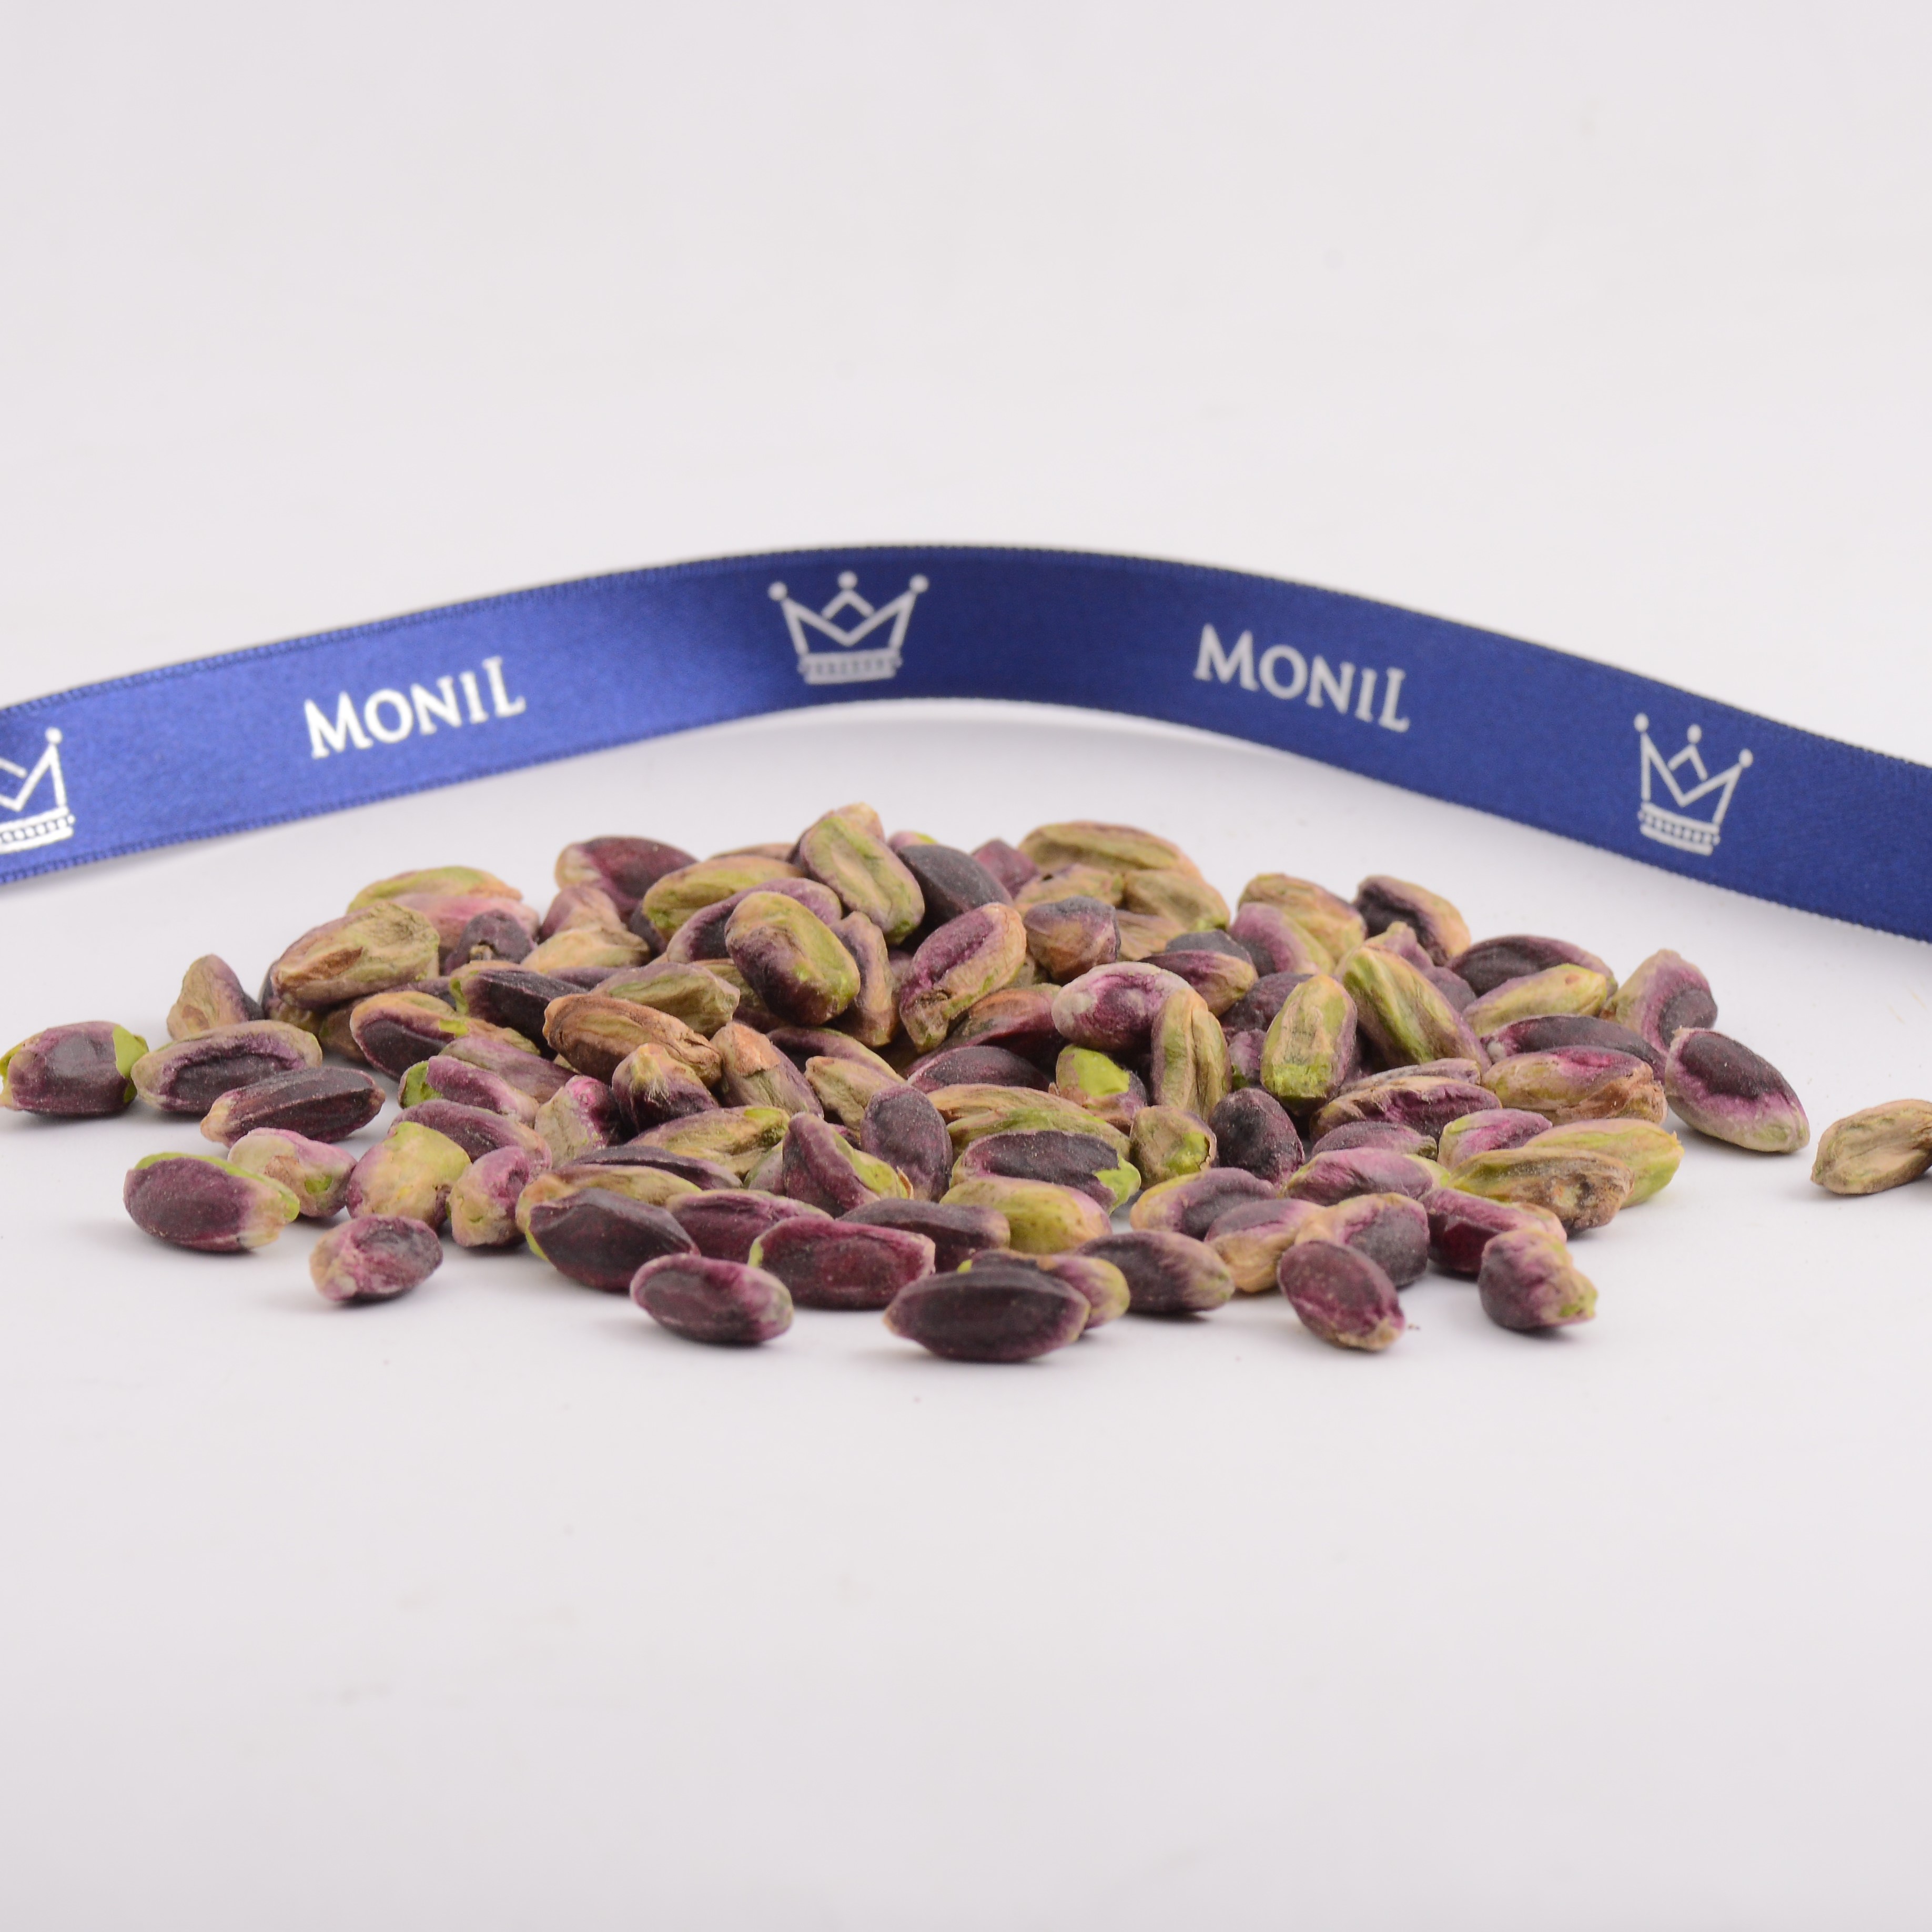 Etna walnut MONIL kernel, nut, snack food from Italy